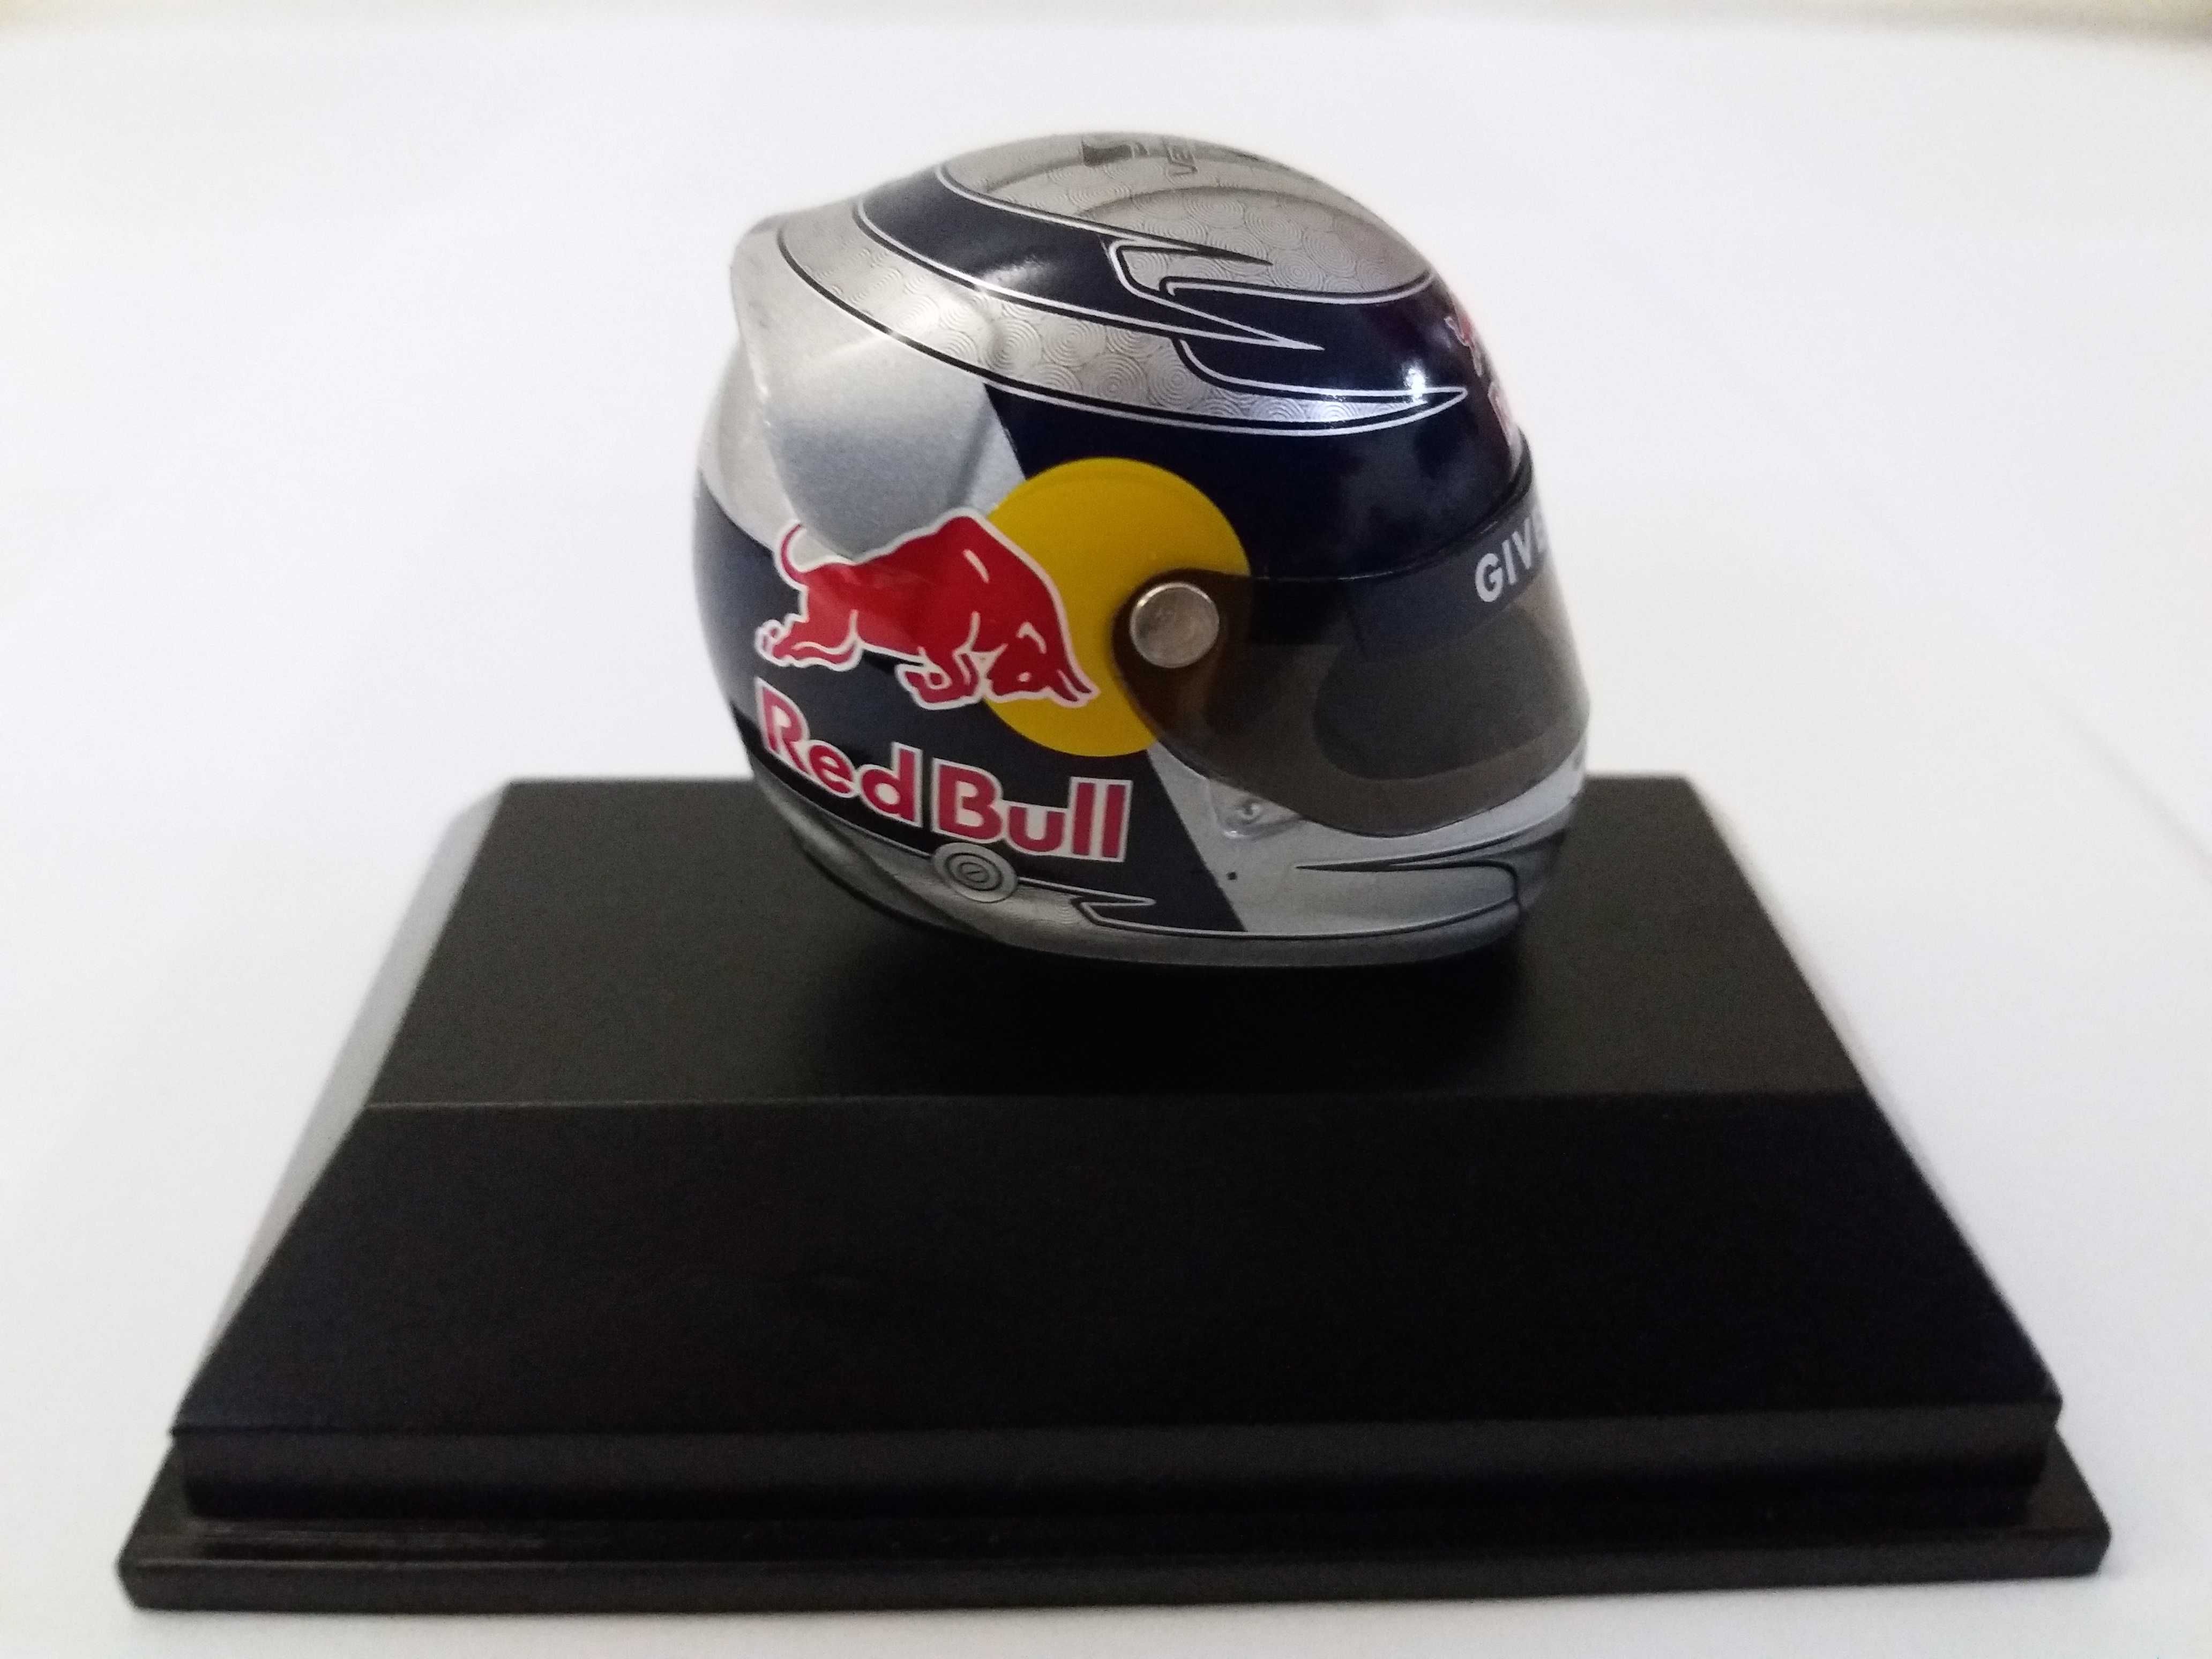 Sebastian Vettel capacetes F1 Minichamps 1:8